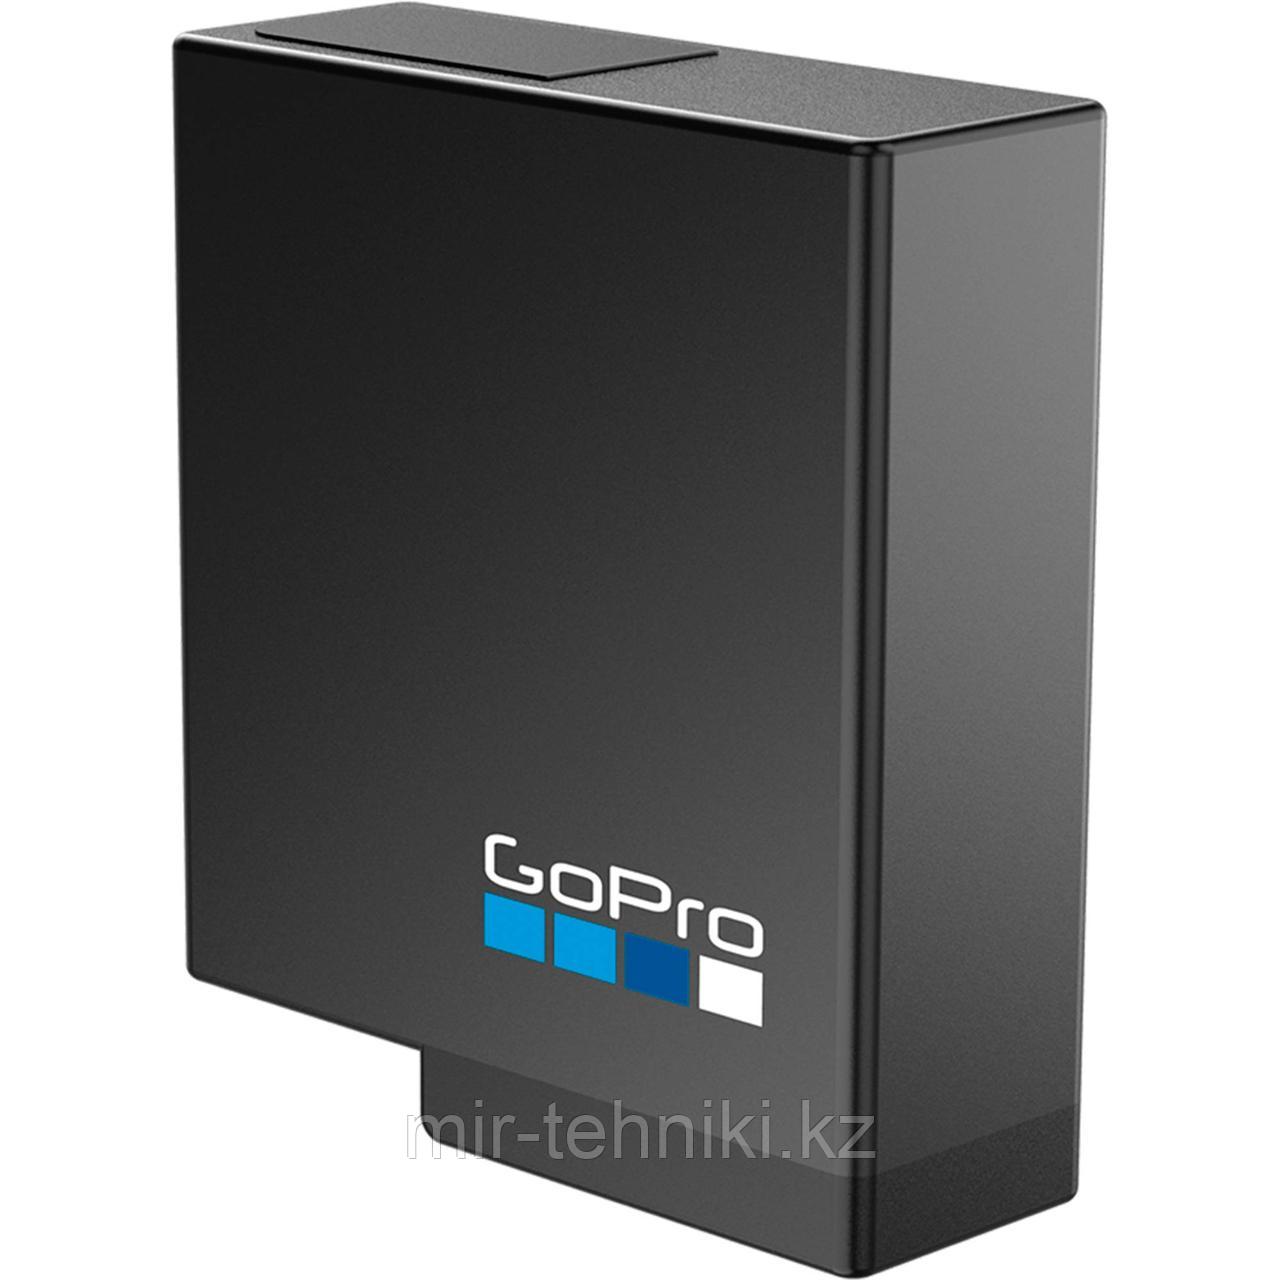 Аккумулятор для GoPro HERO5/6/7 Black (AABAT-001-RU)  оригинал